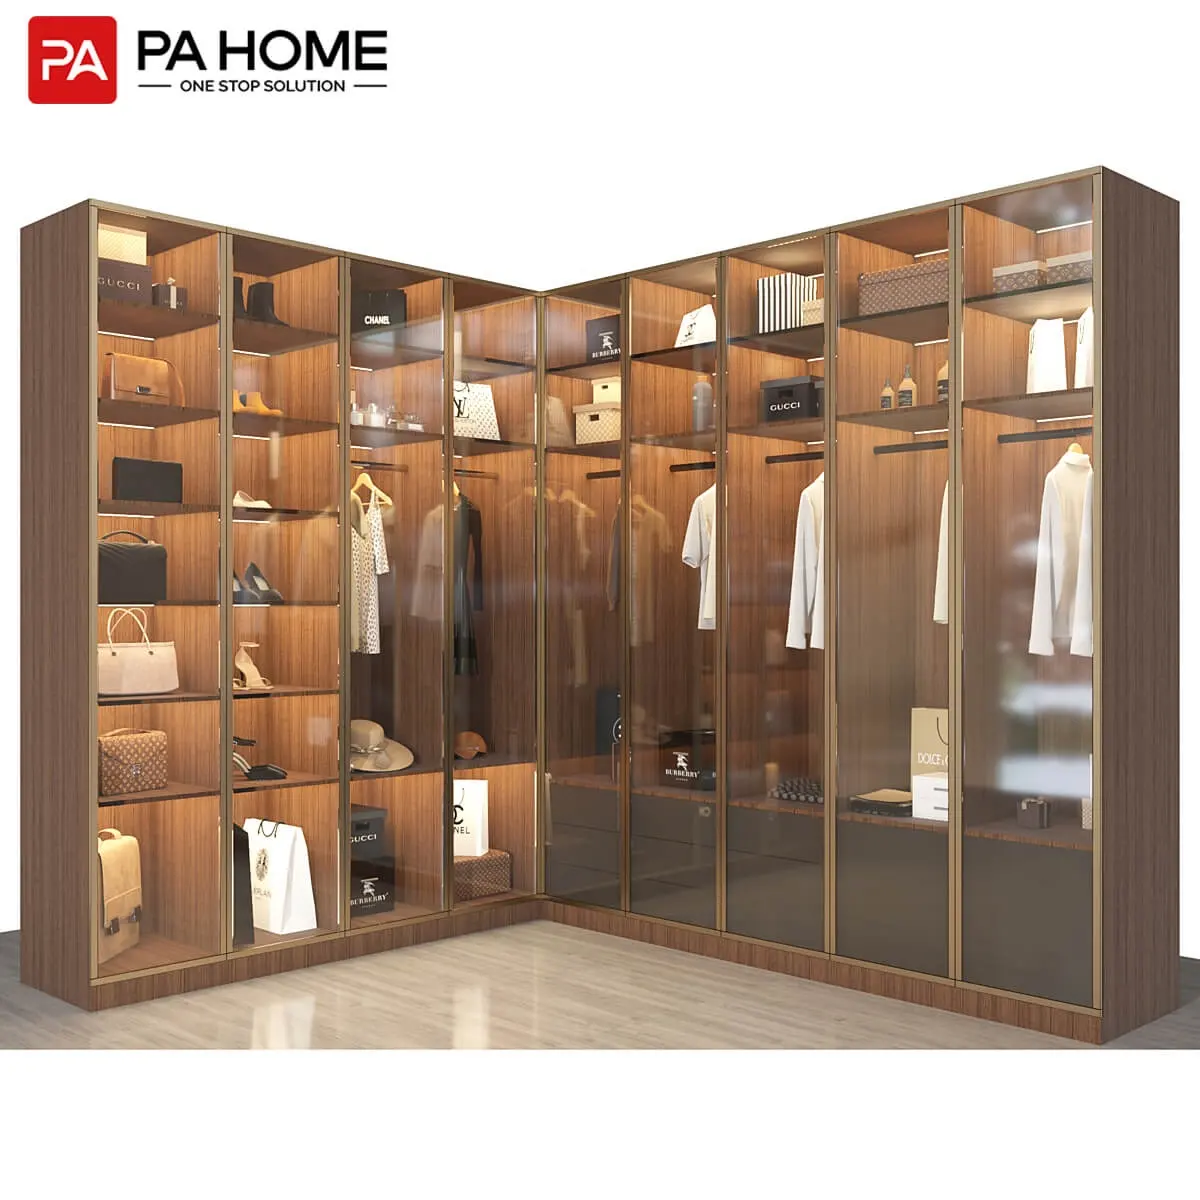 PA luxury customize bedroom storage almirah design pictures glass built in wardrobe